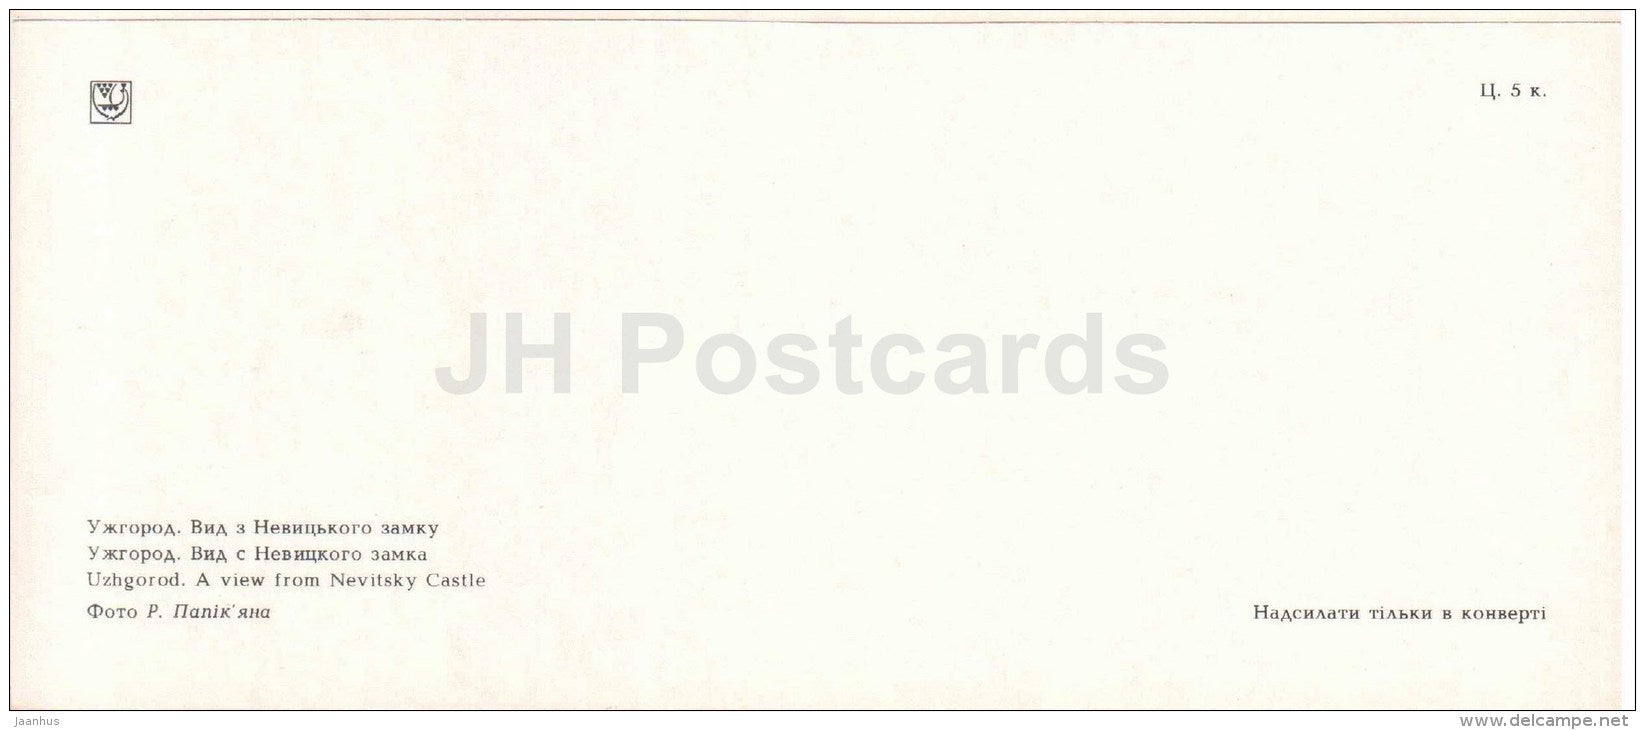 a view from Nevitsky castle - Uzhgorod - Uzhhorod - 1986 - Ukraine USSR - unused - JH Postcards